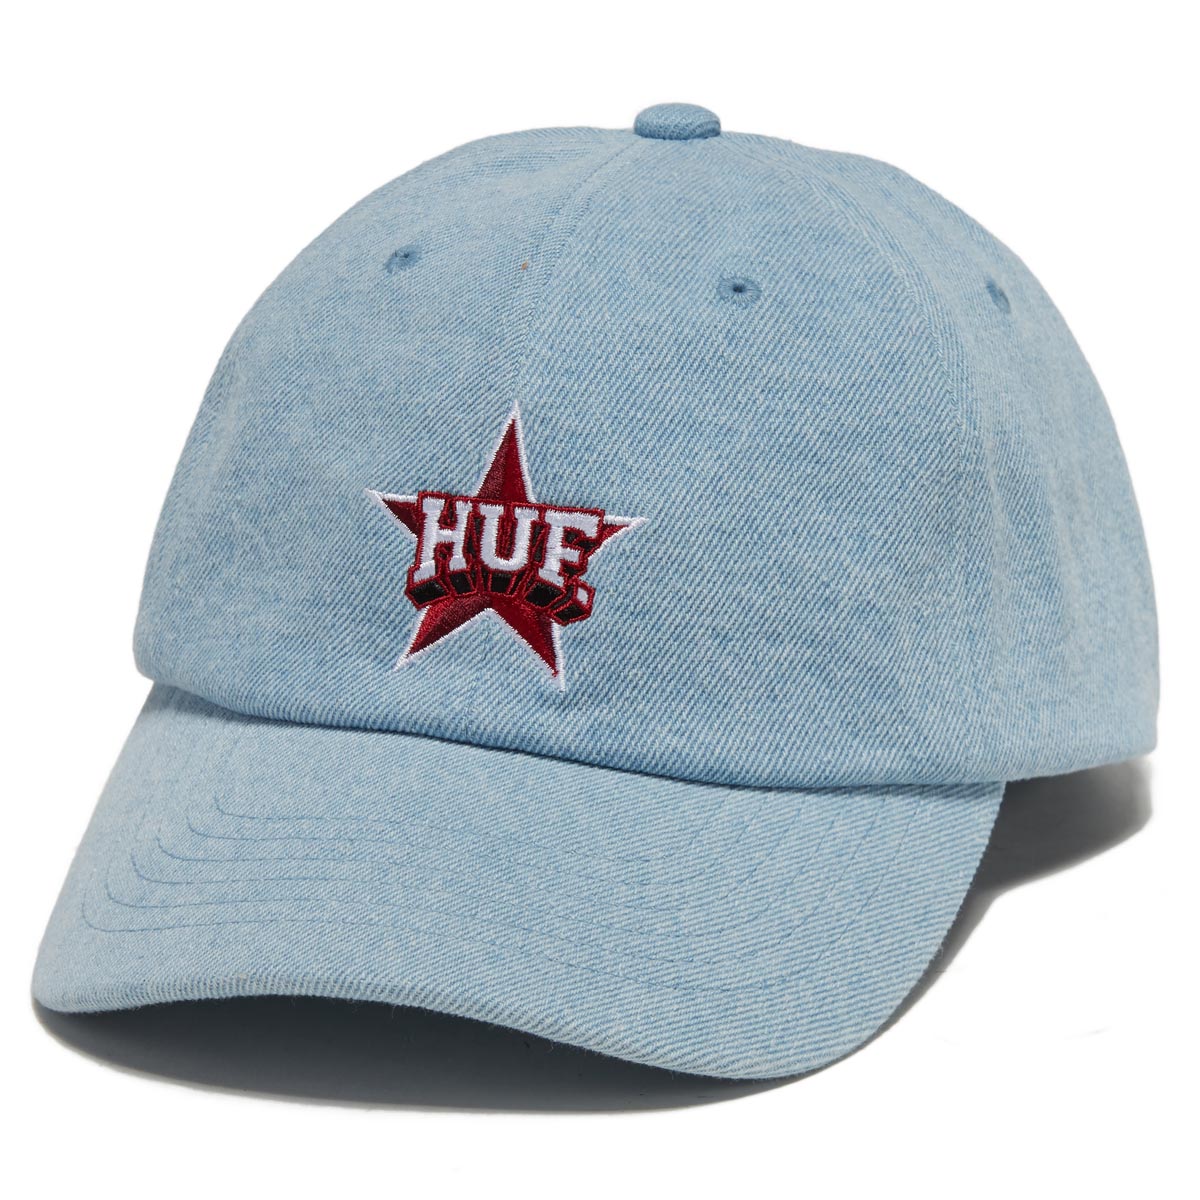 HUF All Star 6 Panel CV Hat - Light Blue image 1